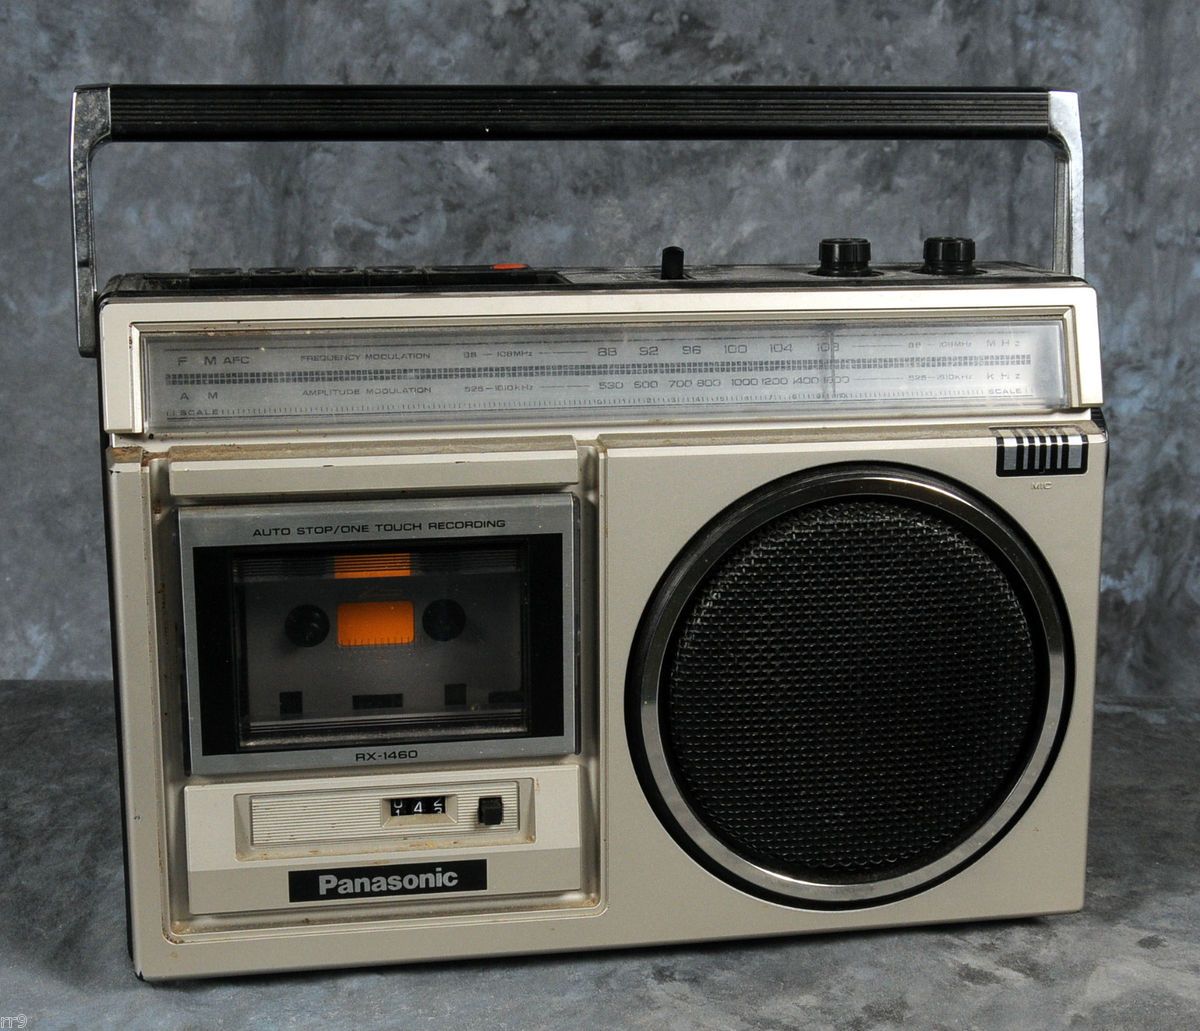 PANASONIC AM FM CASSETTE RECORDER PORTABLE RADIO Model RX 1460